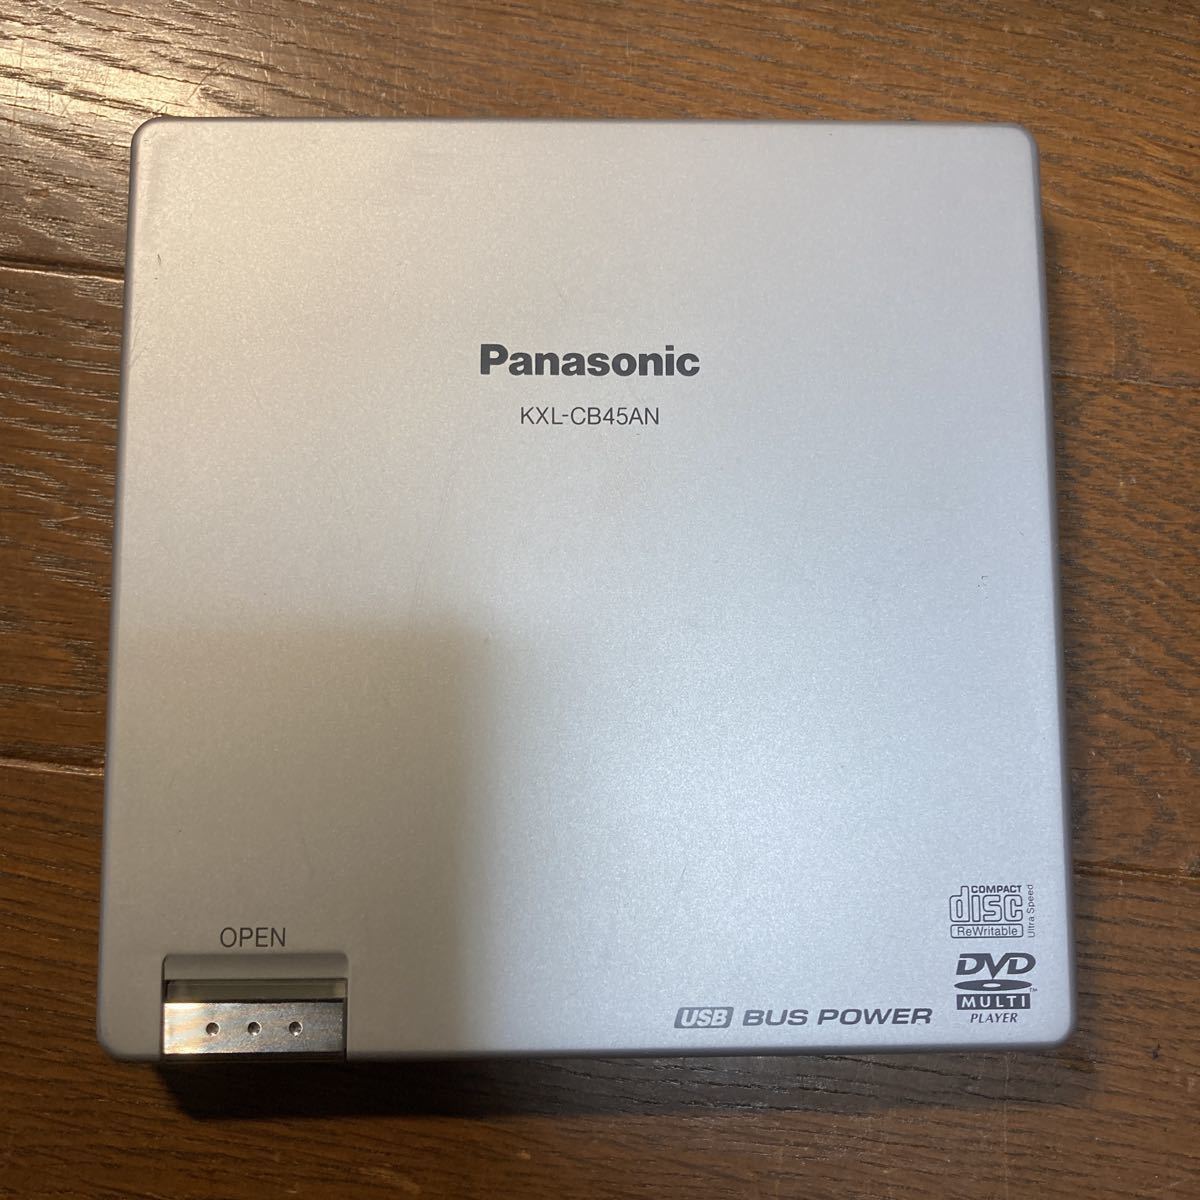 Panasonic KXL-CB45AN USBバスパワー外付けポータブルDVD-ROM＆CD-R/RWドライブ+ACアダプターKX-WZ712 通電のみ確認